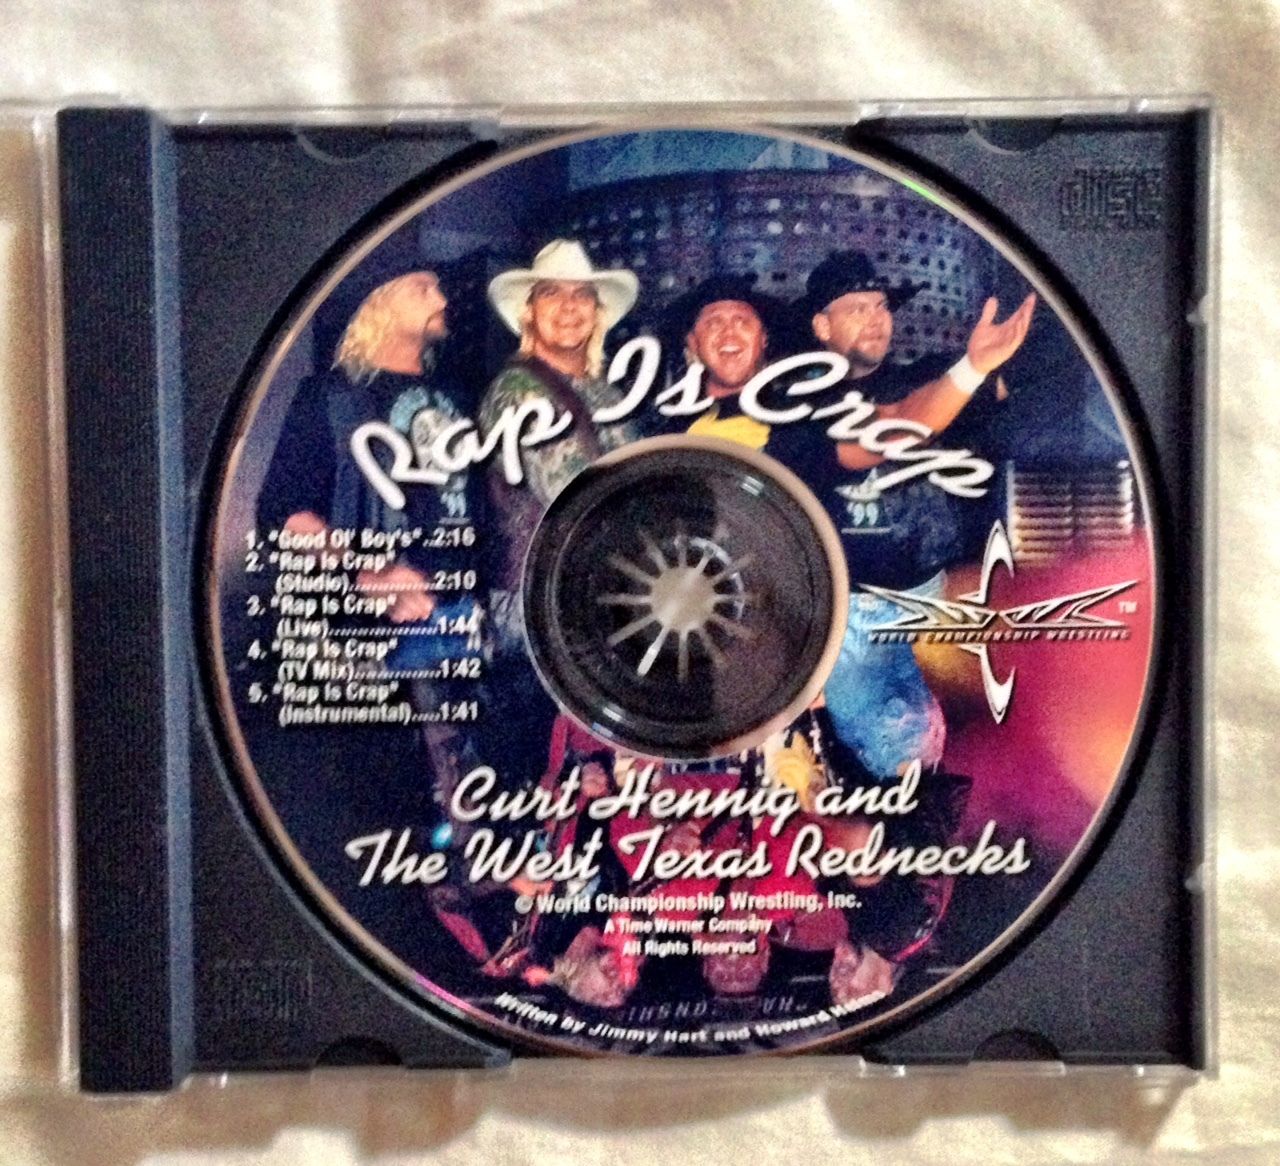 WCW West Texas Rednecks Good Old Boys Rap Is Crap CD single